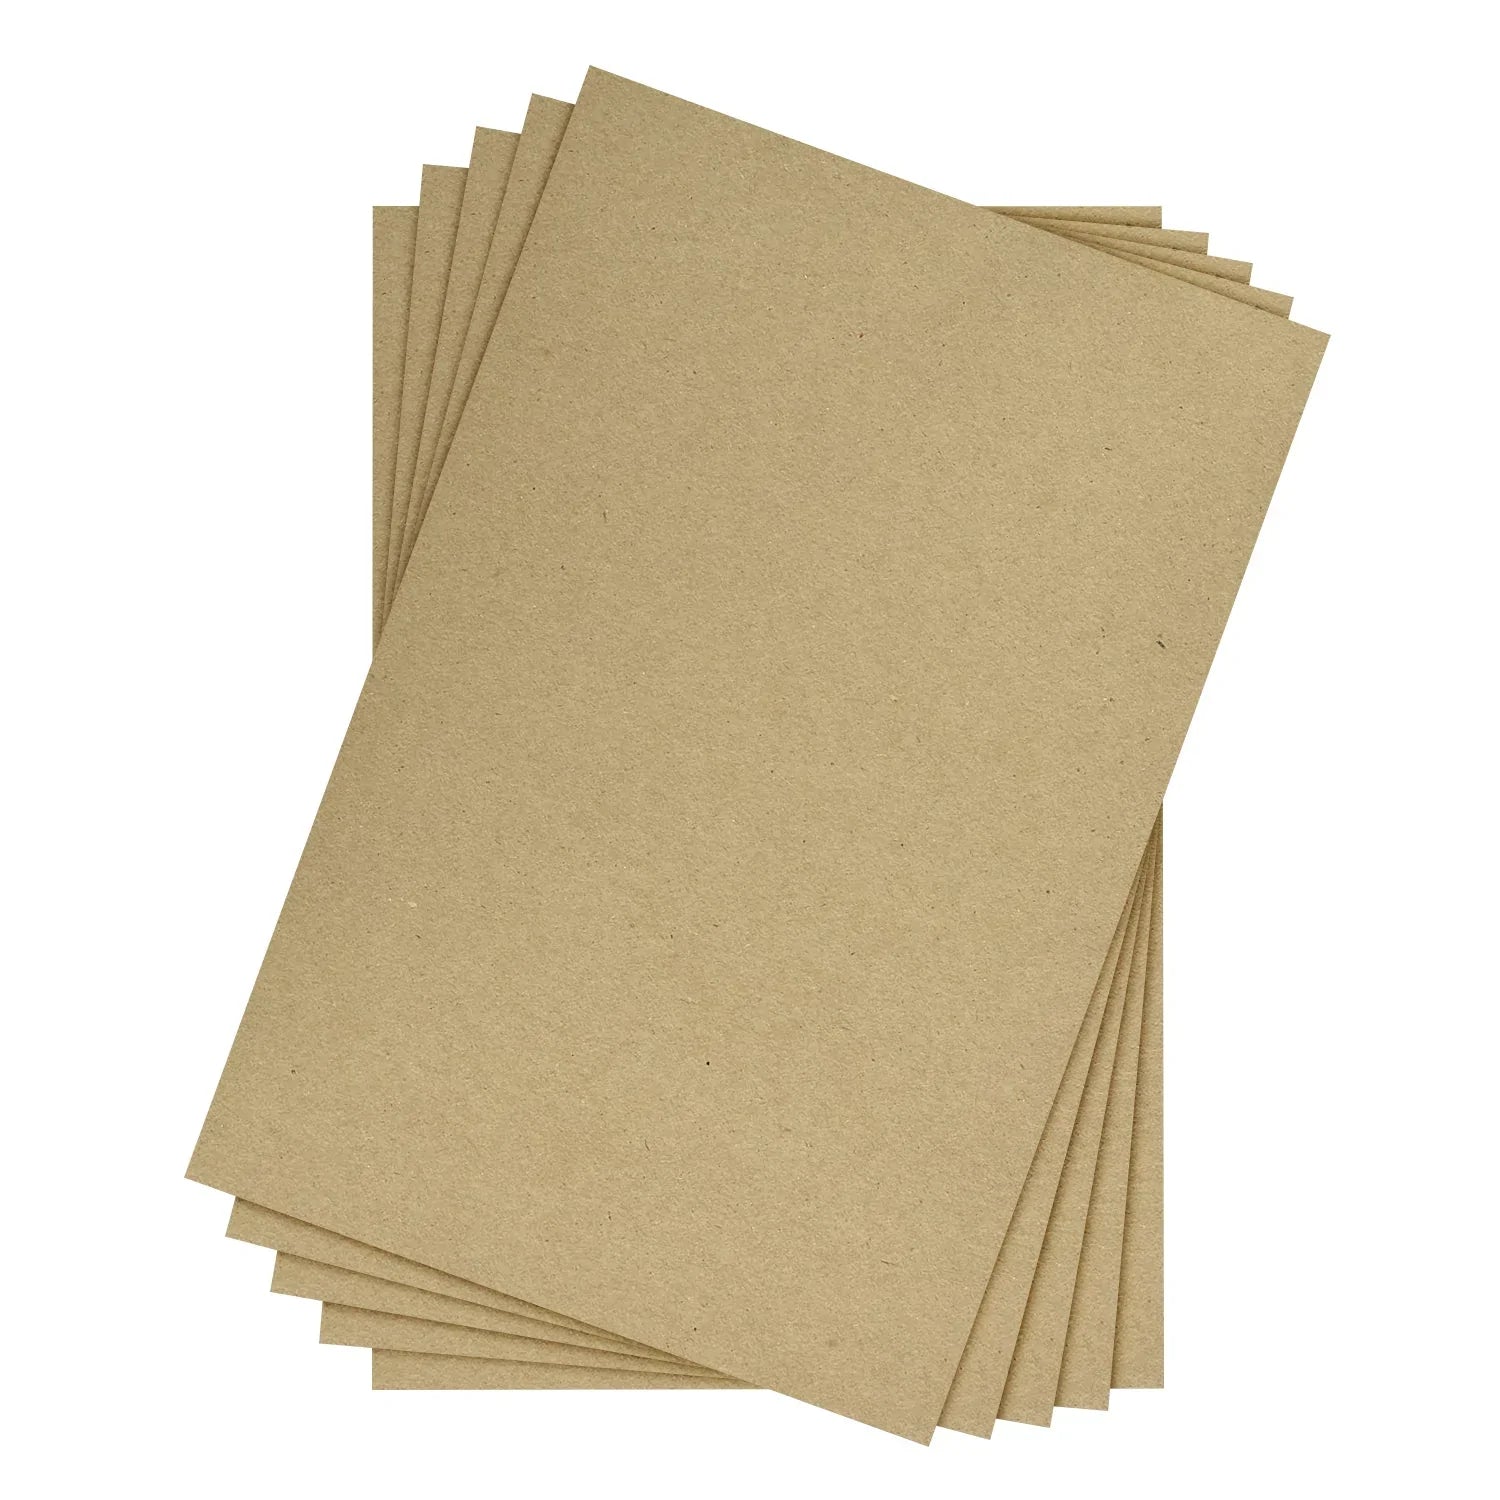 White Cardboard Pads - 12 X 18 Inch